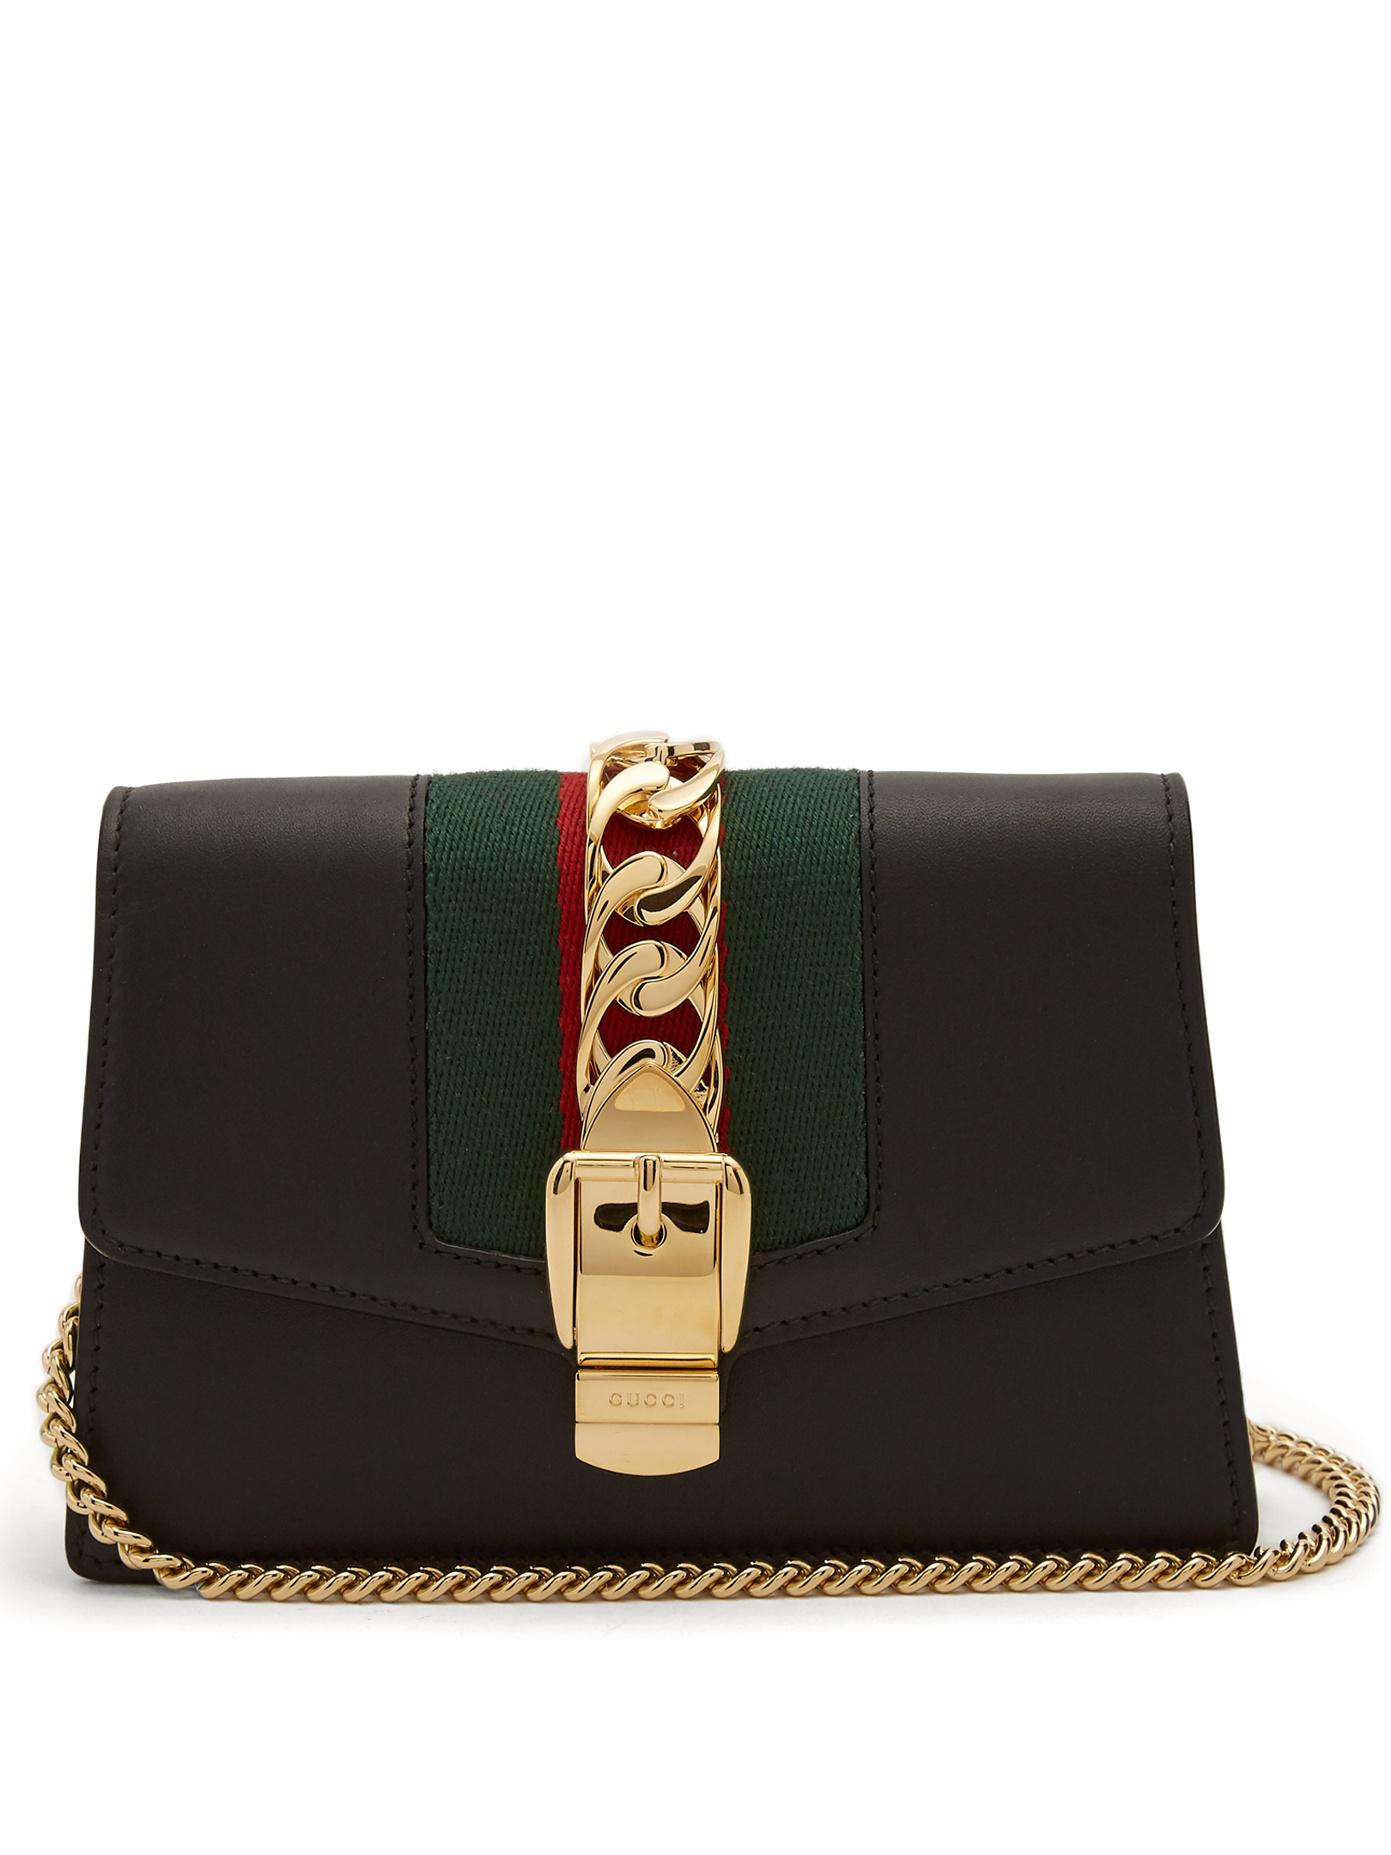 Gucci Sylvie Super Mini Leather Shoulder Bag in Black | Lyst